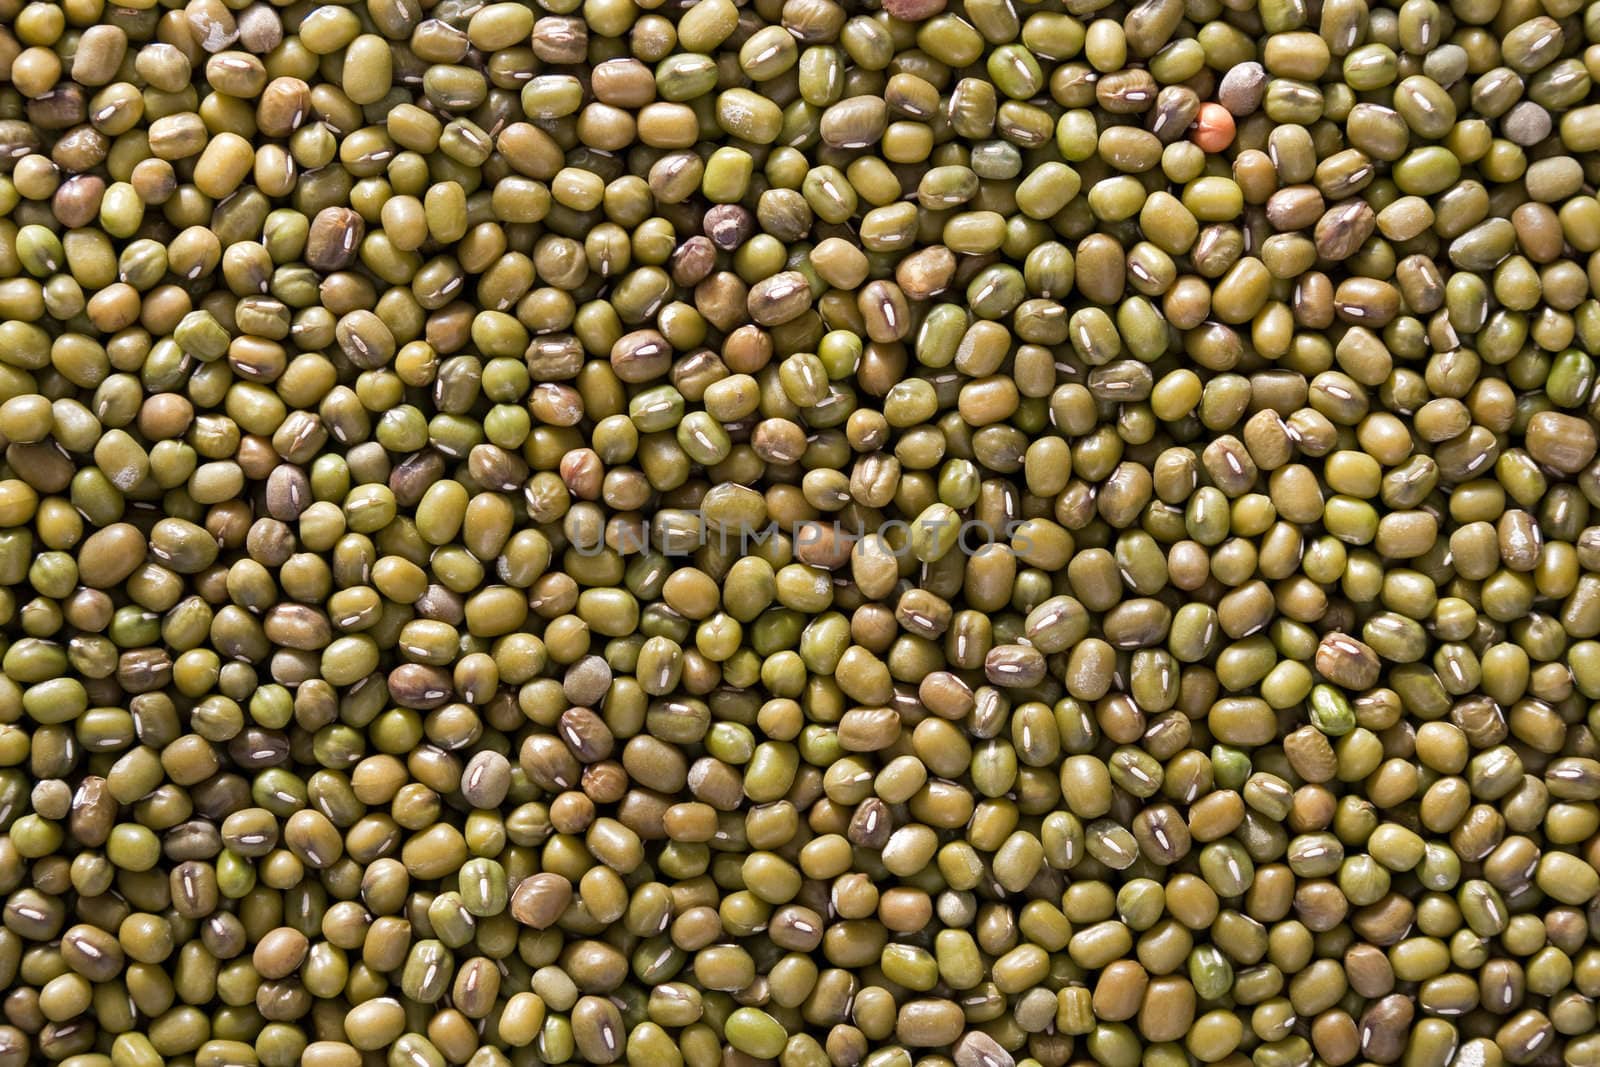 Green mung beans by raliand